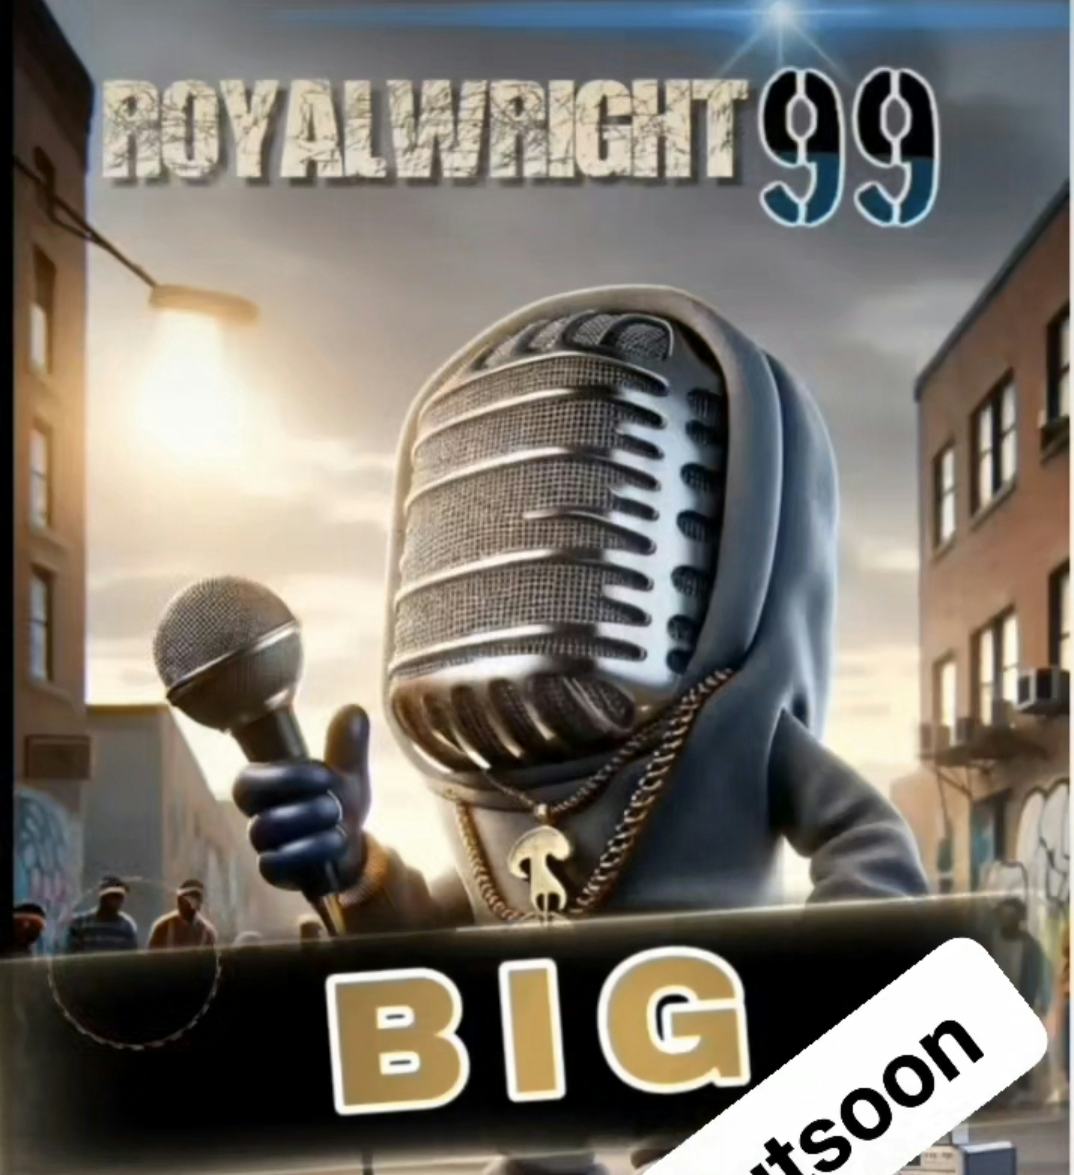 ROYALWRIGHT 99 MUSIC 🎶 